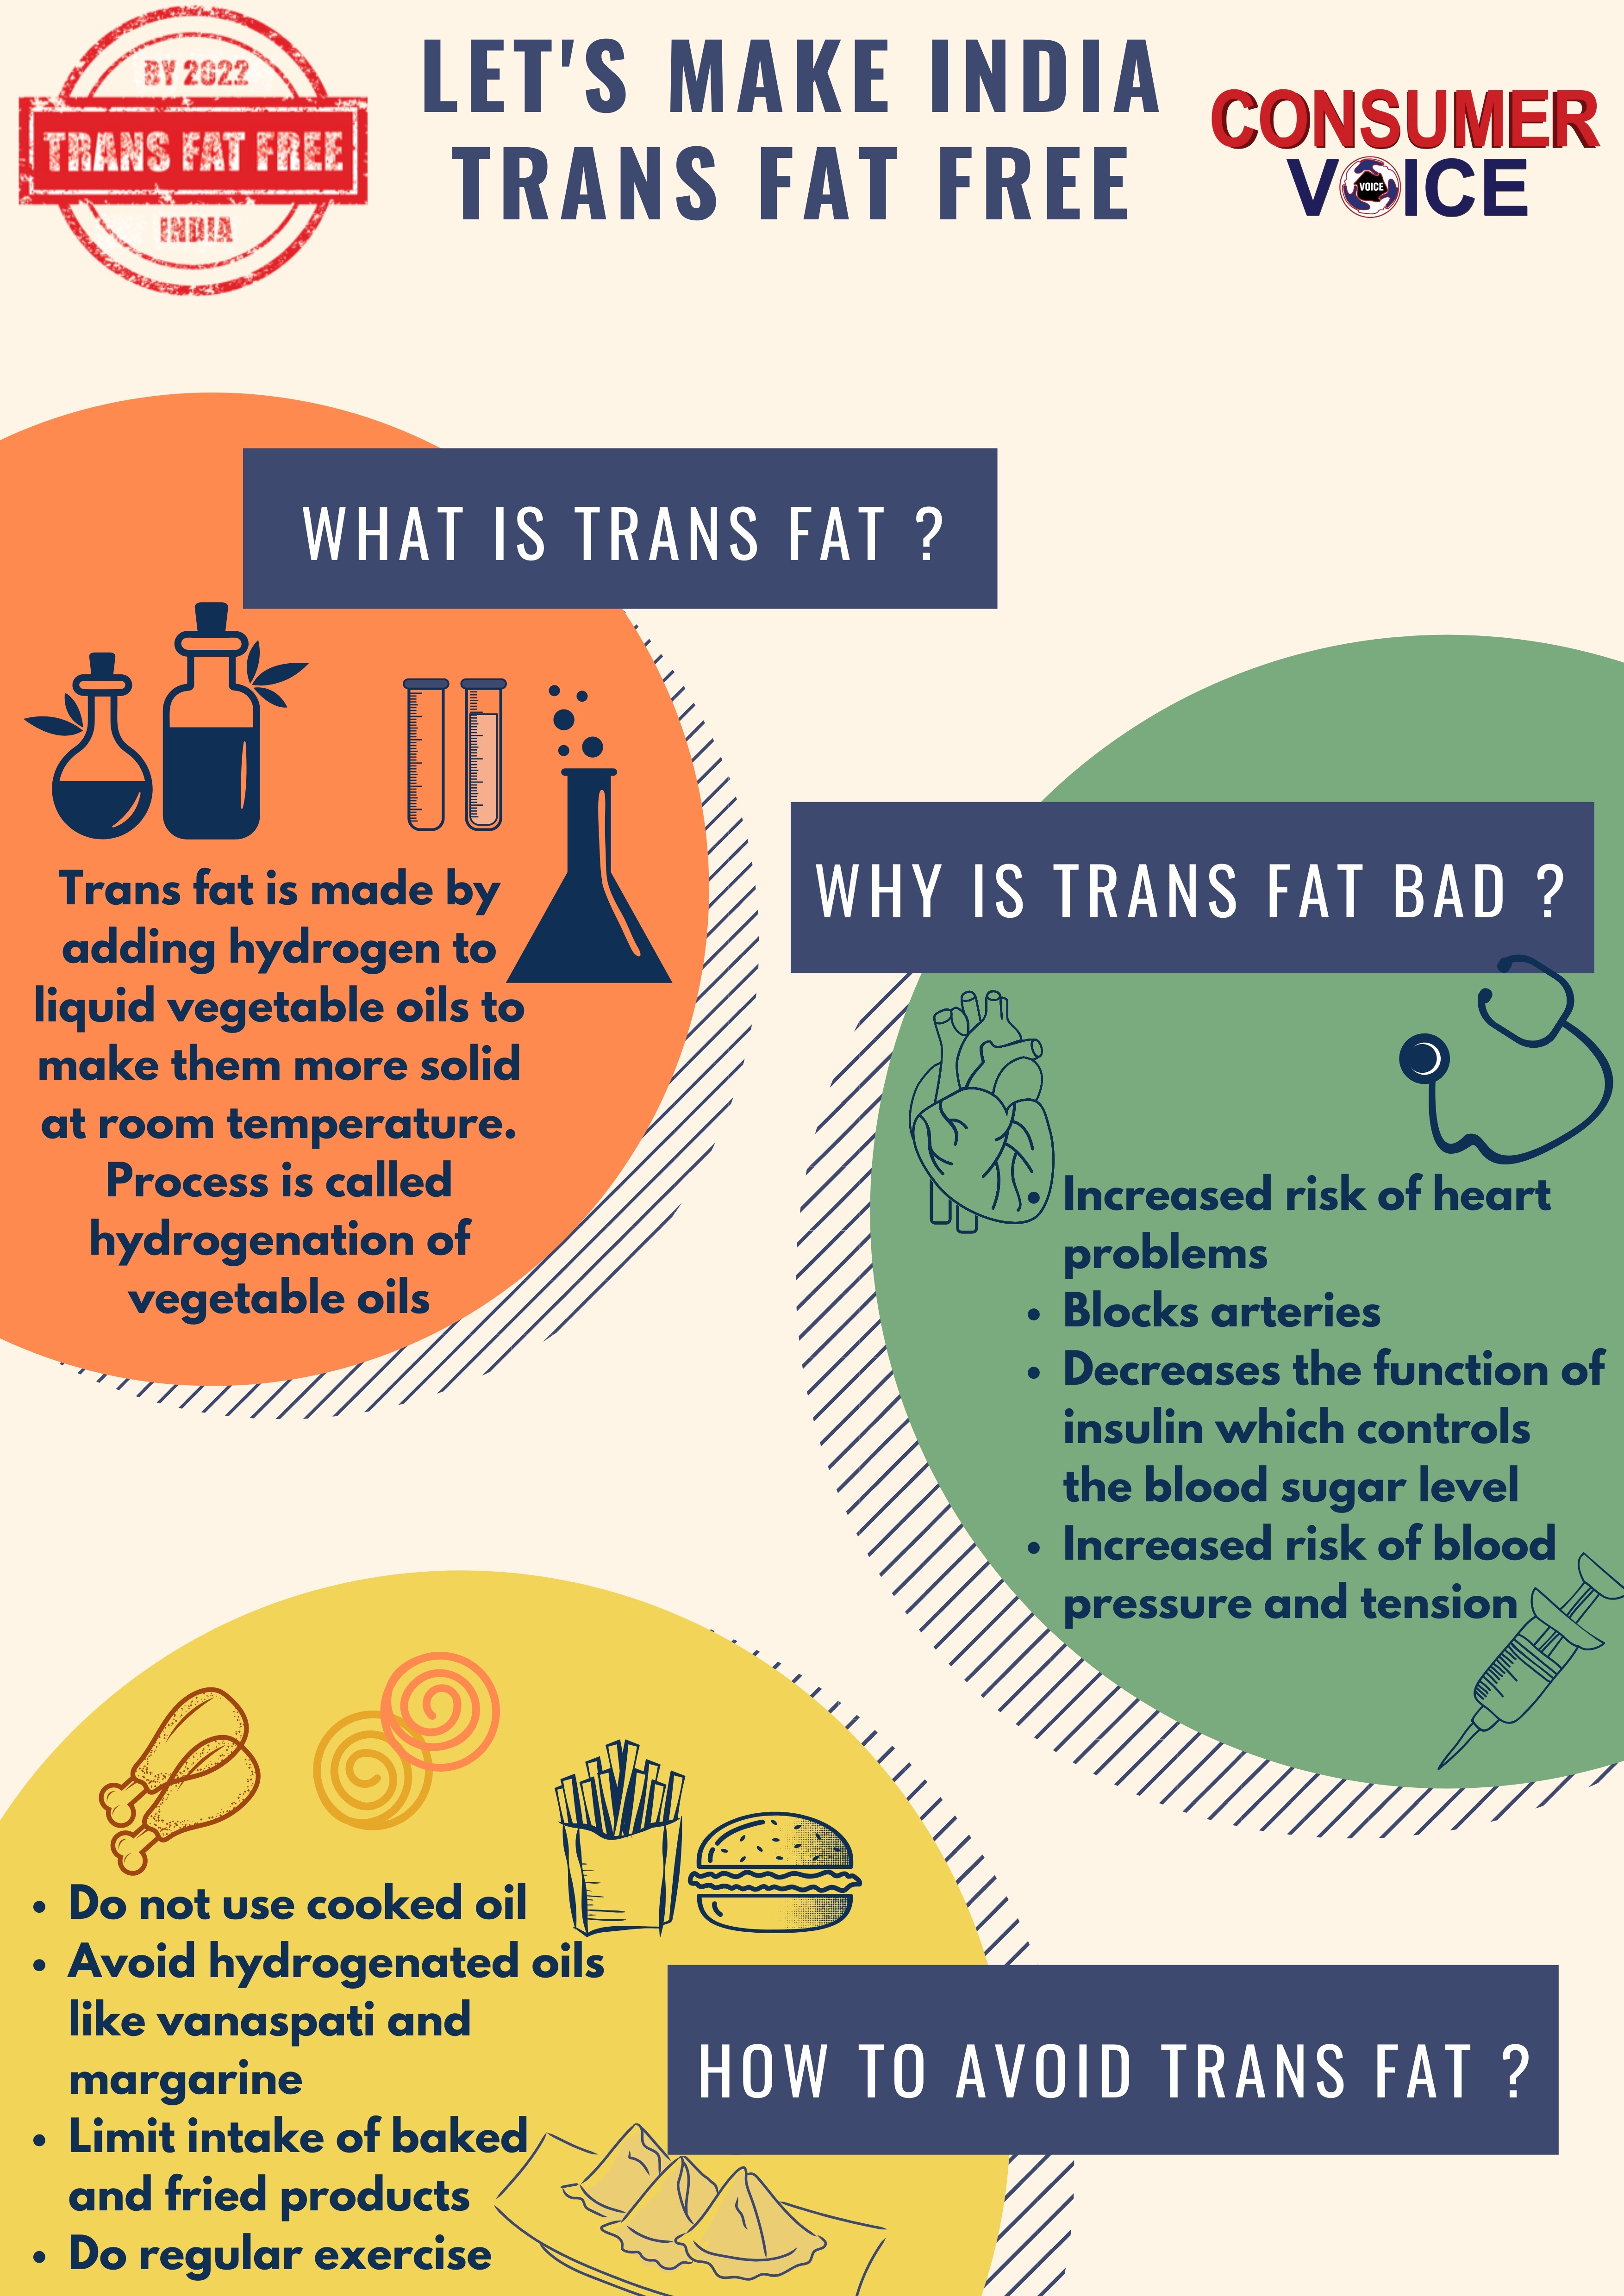 Stay trans fat free